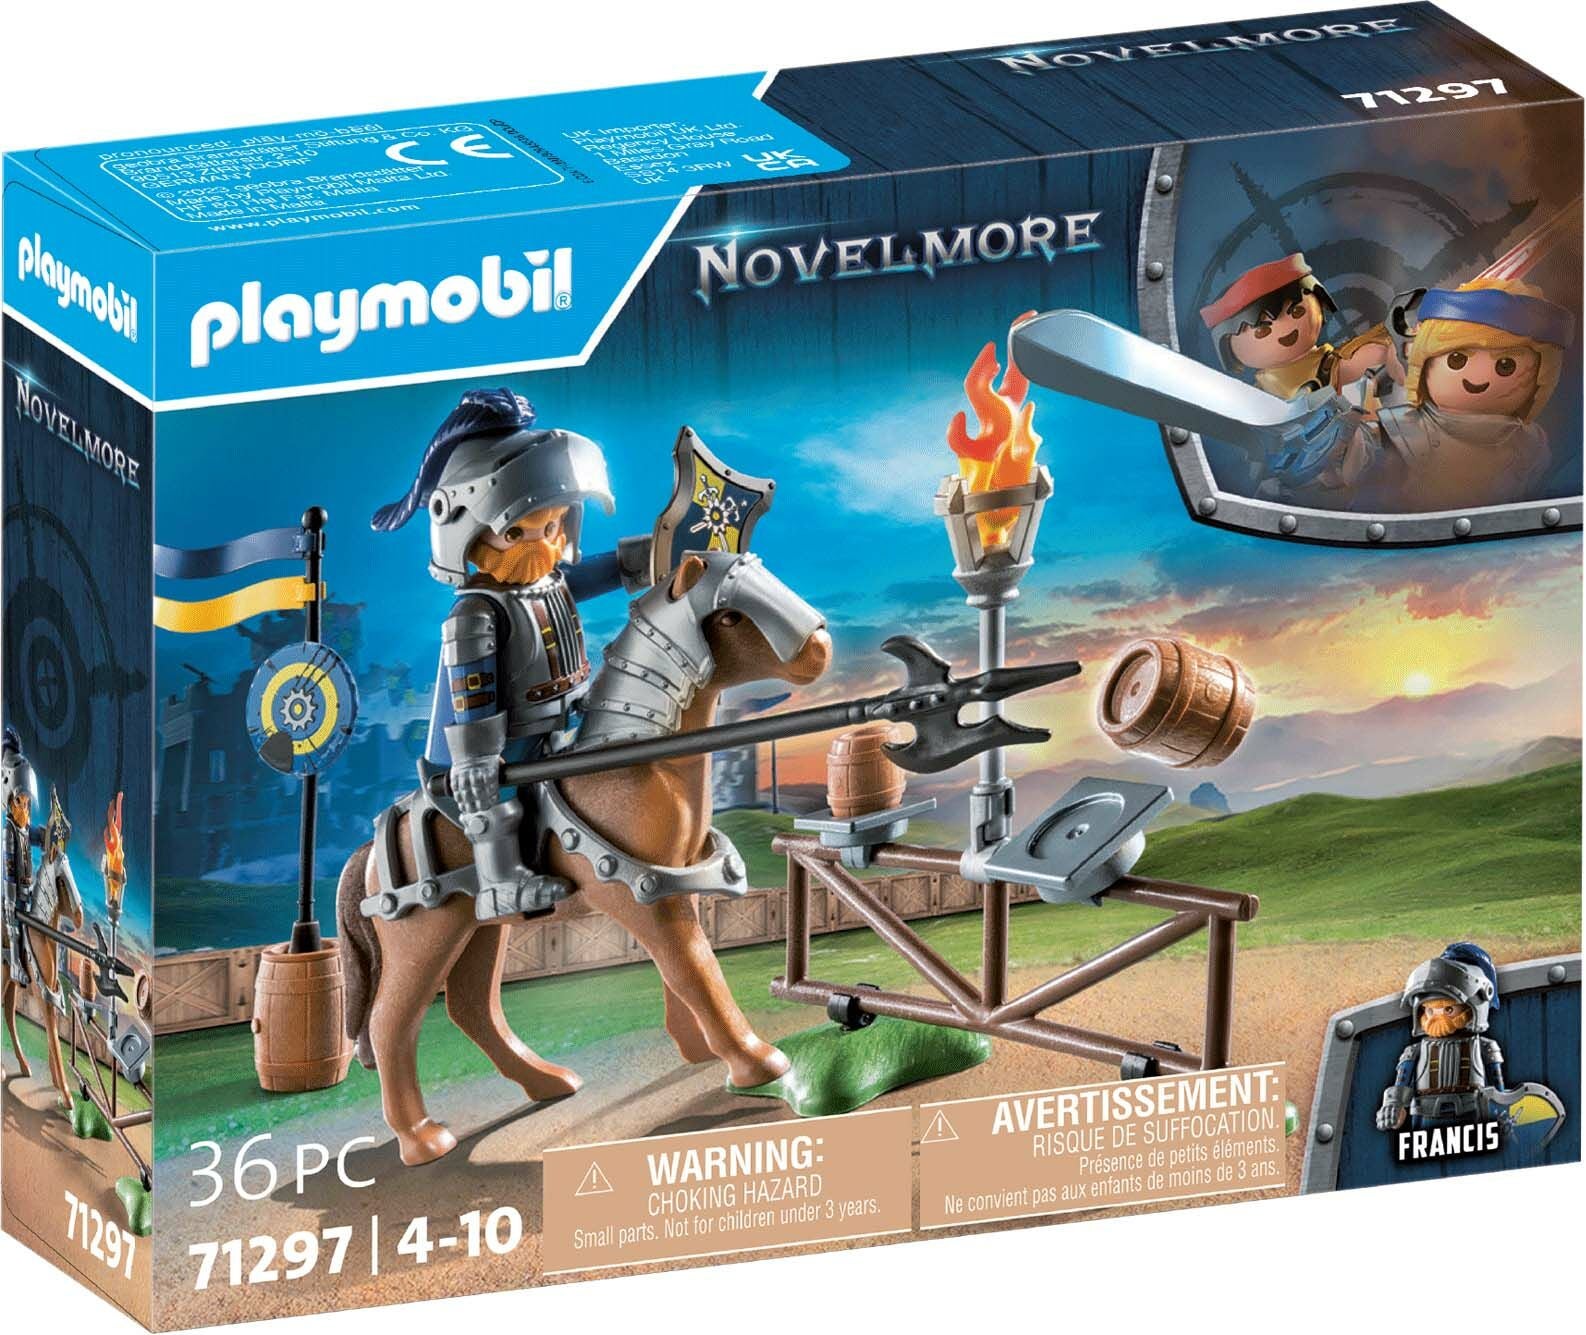 Playmobil 71297 Novelmore Baukasten Übungsplatz von Playmobil